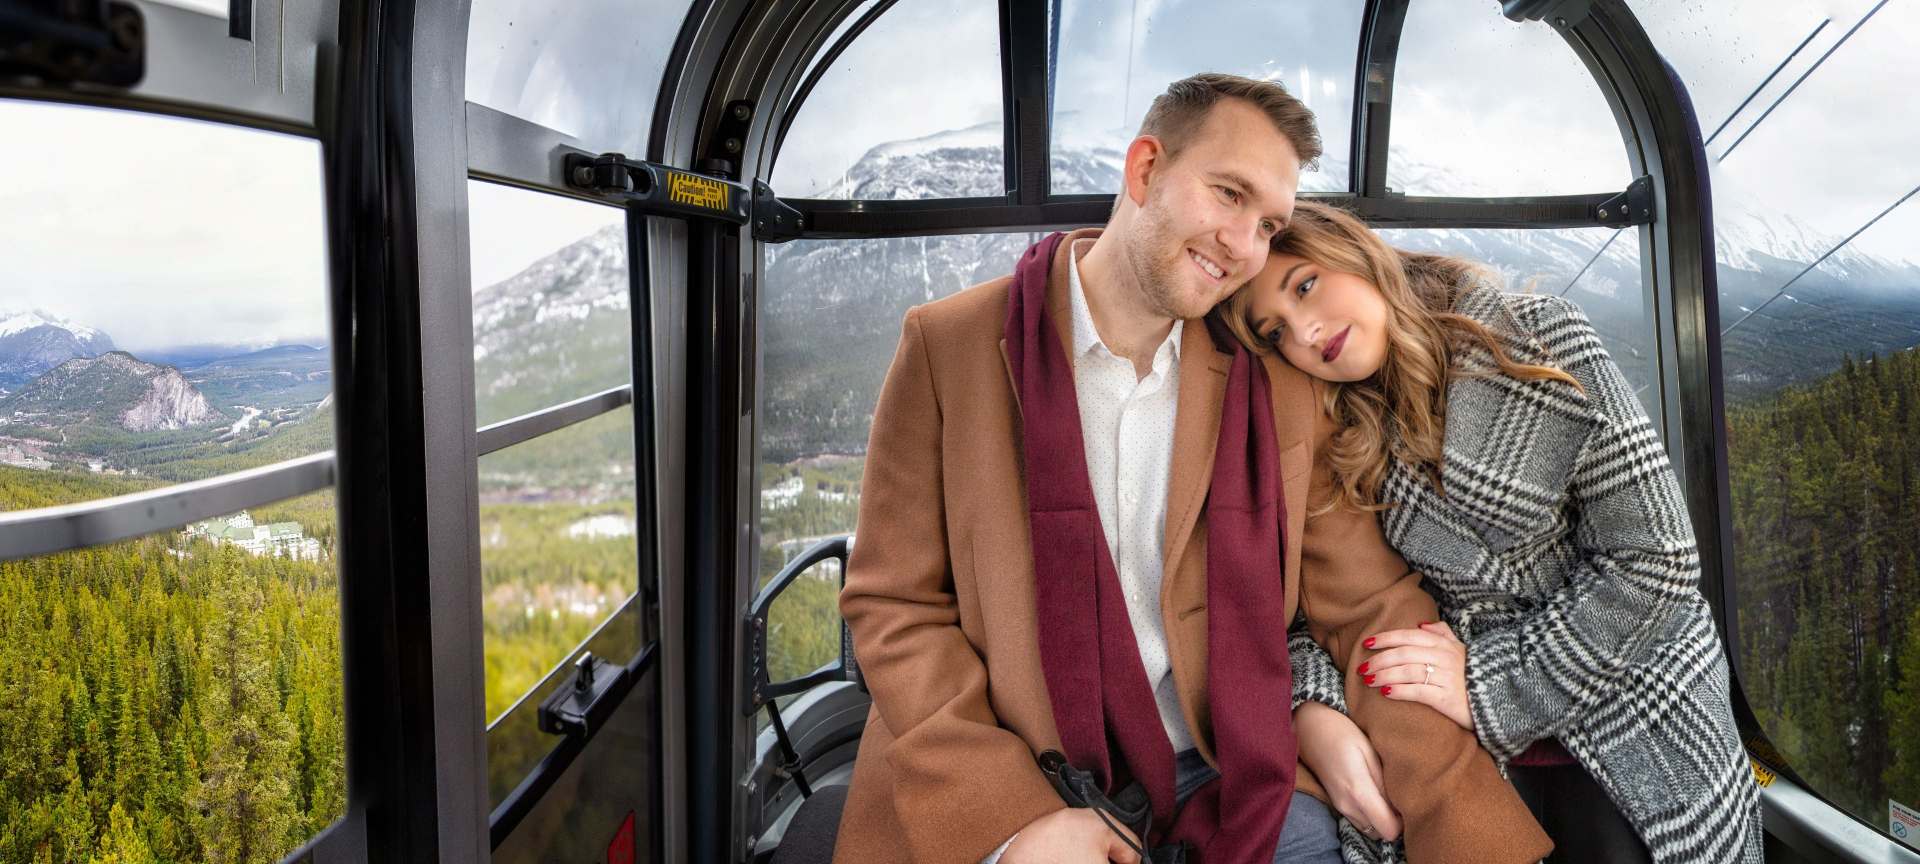 Banff Proposal with Mountain Views & Gondola-Ride - recently engaged couple in Banff gondola